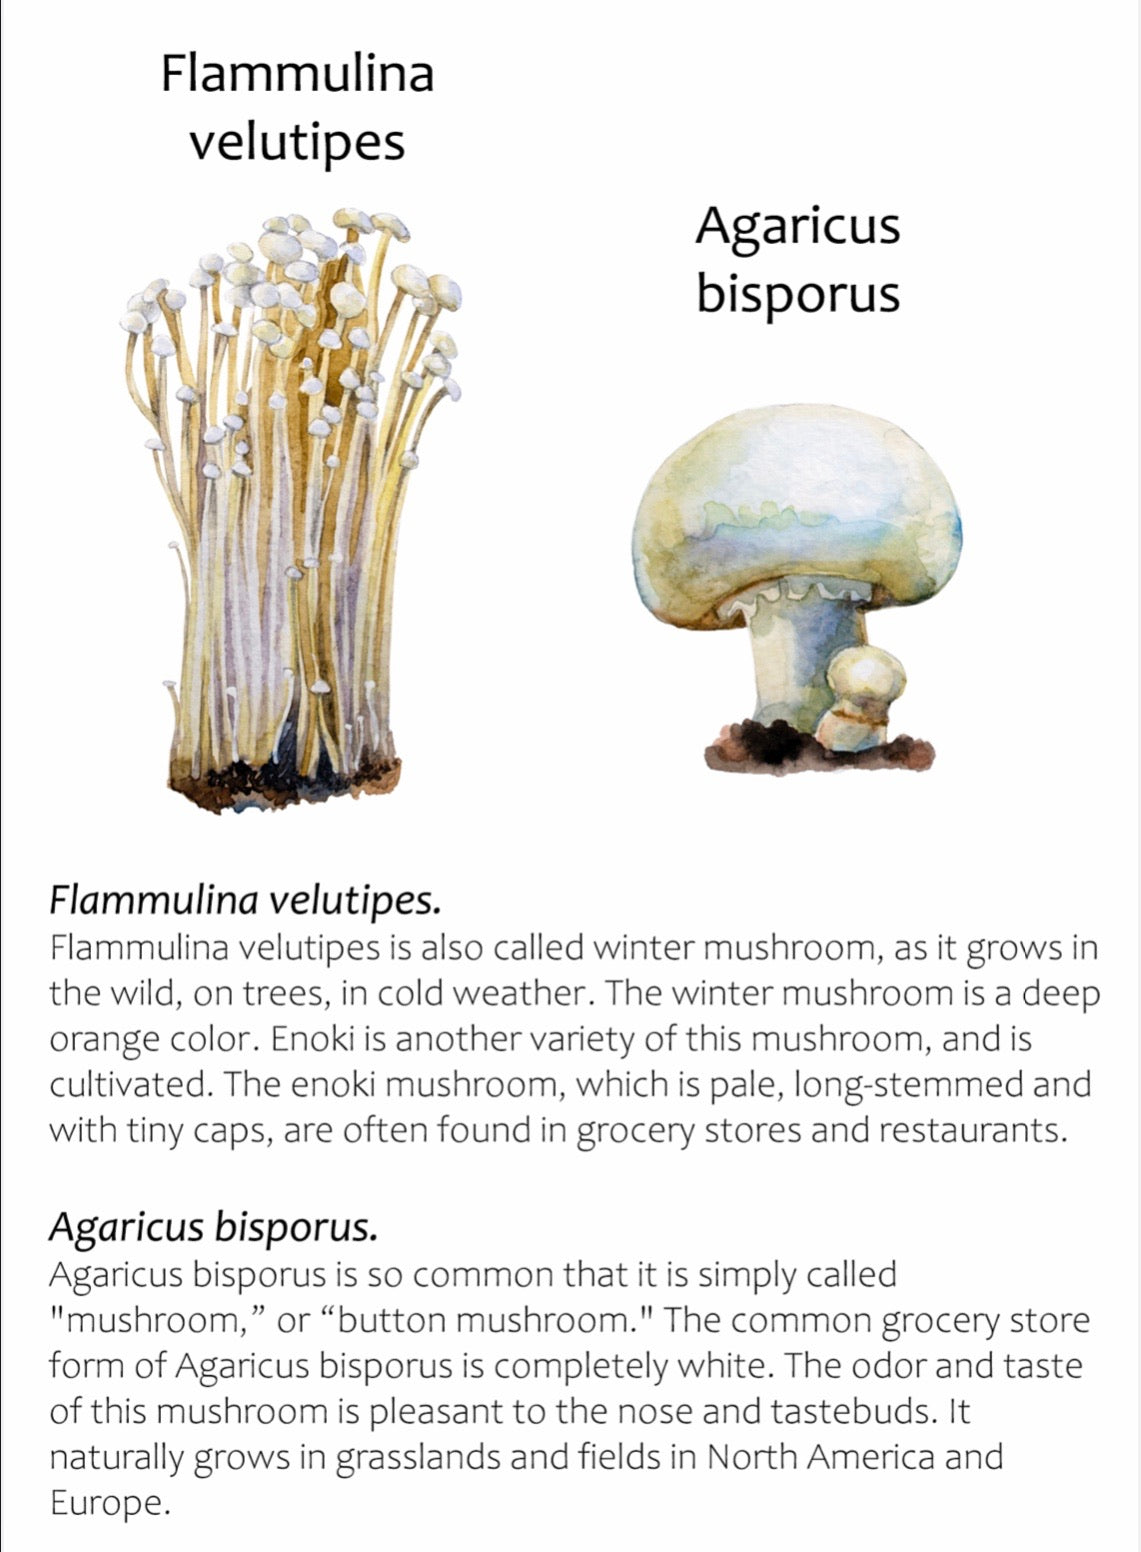 Mushroom Downloadable Set ( 6 images plus anatomy pdf download only)